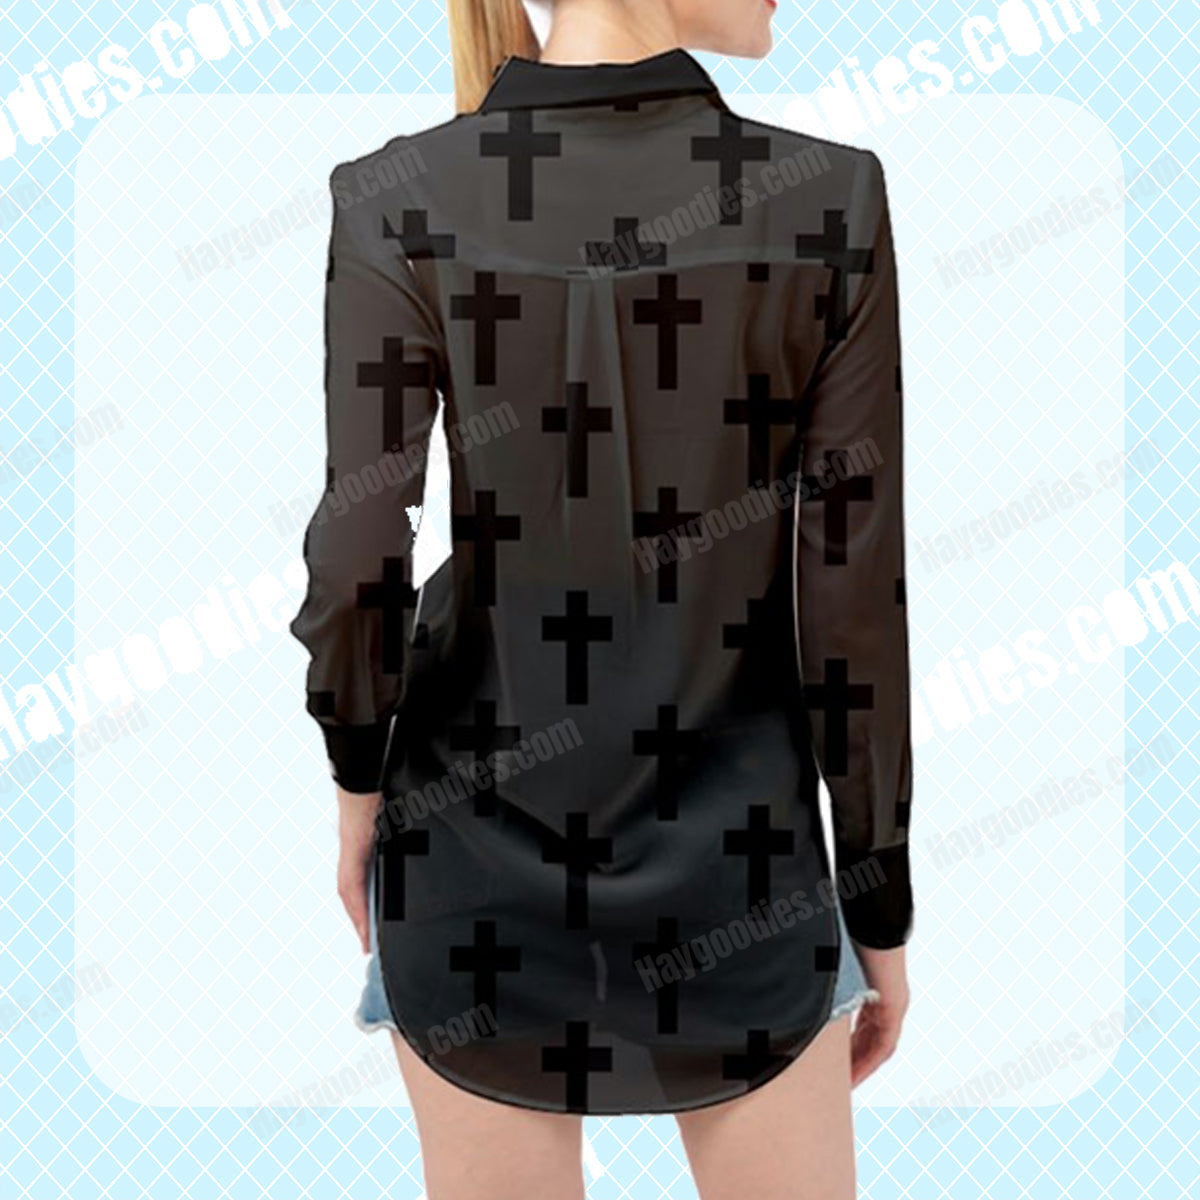 Black Cross Pattern Long Sleeve Chiffon Shirt-XS to 5XL